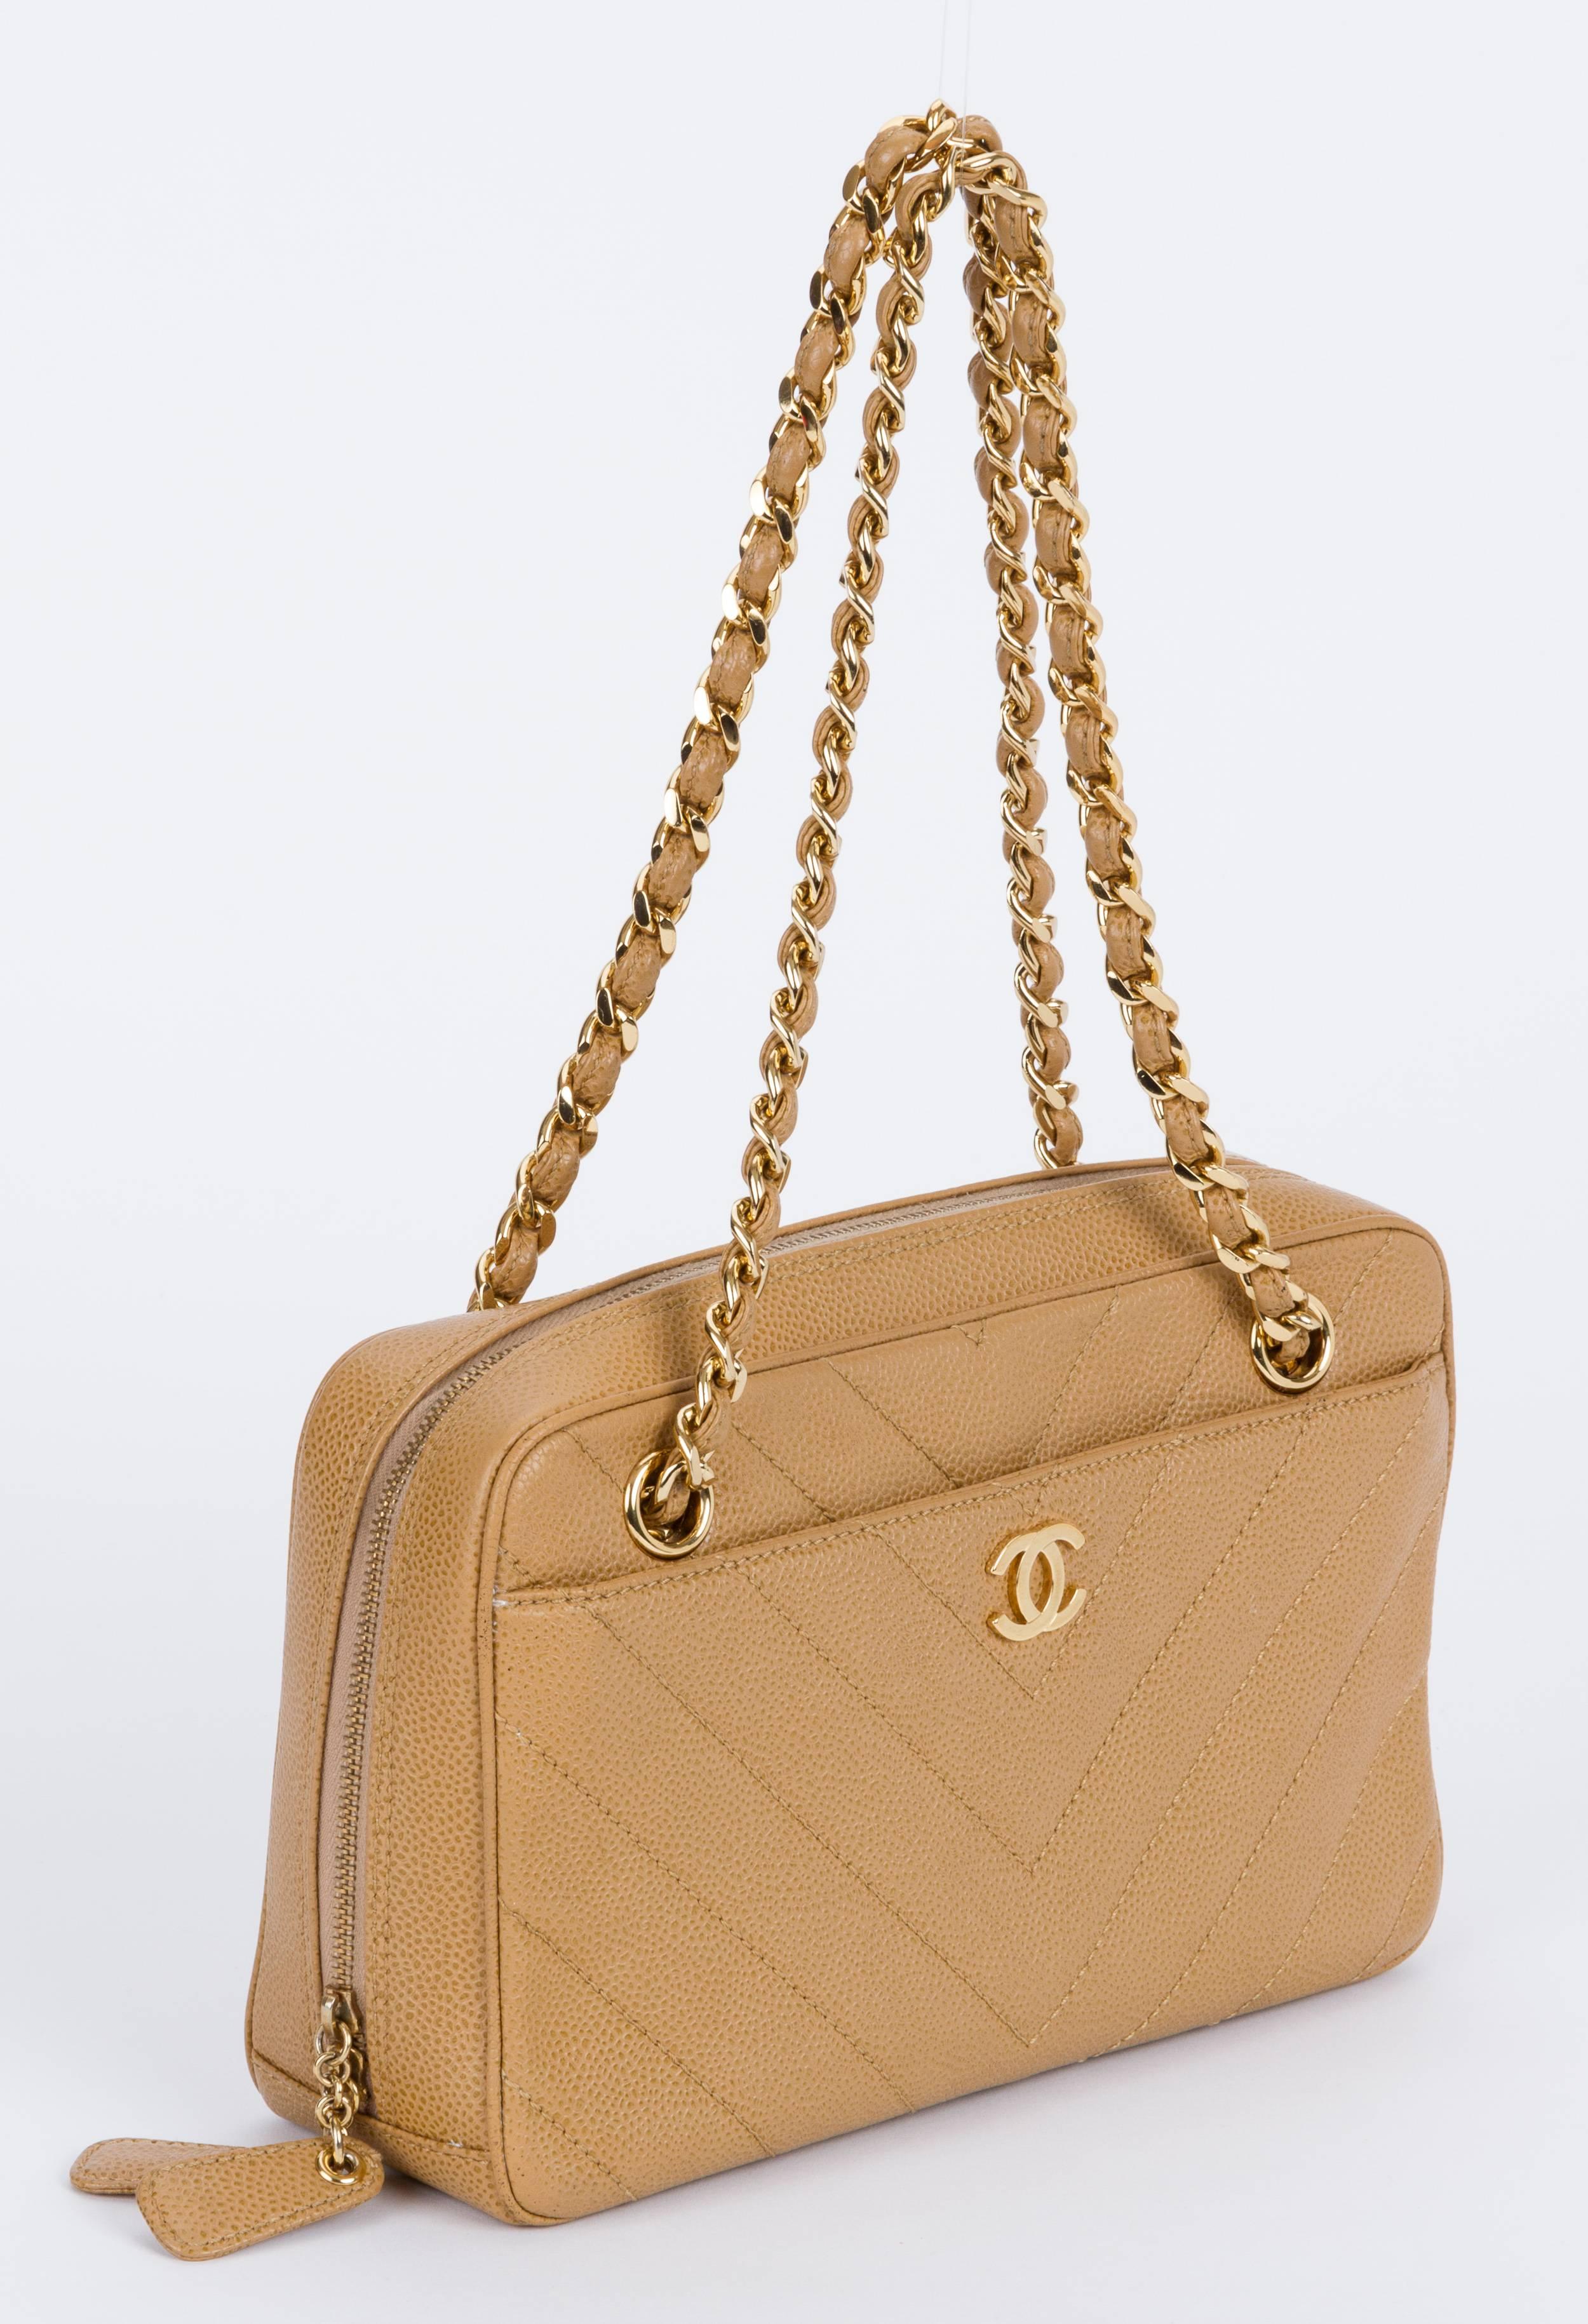 Chanel beige caviar leather zipped handbag with gold tone hardware. Shoulder drop 8.5